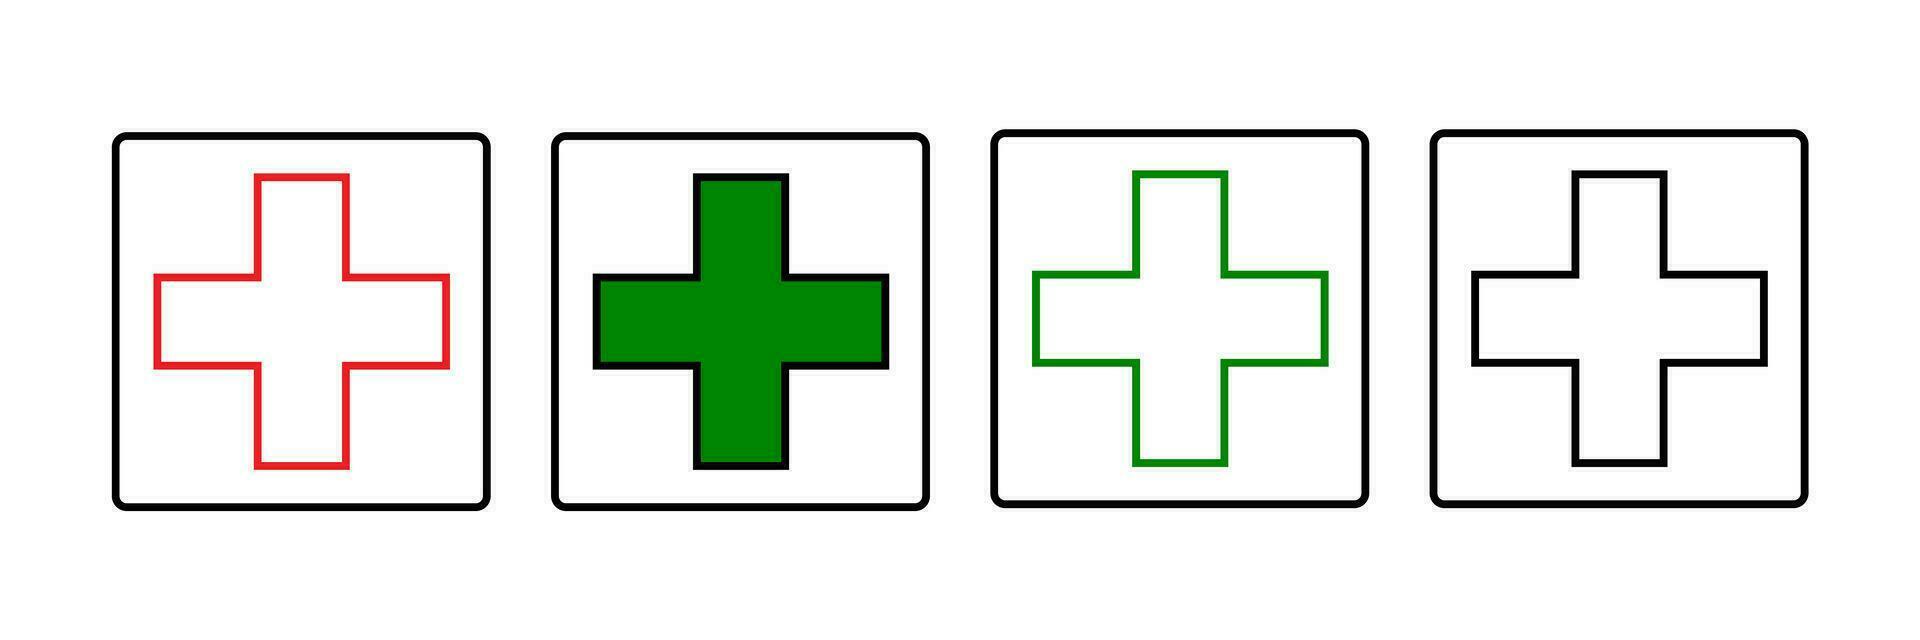 medicinsk korsa ikon. sjukhus symbol. tecken apotek vektor. vektor